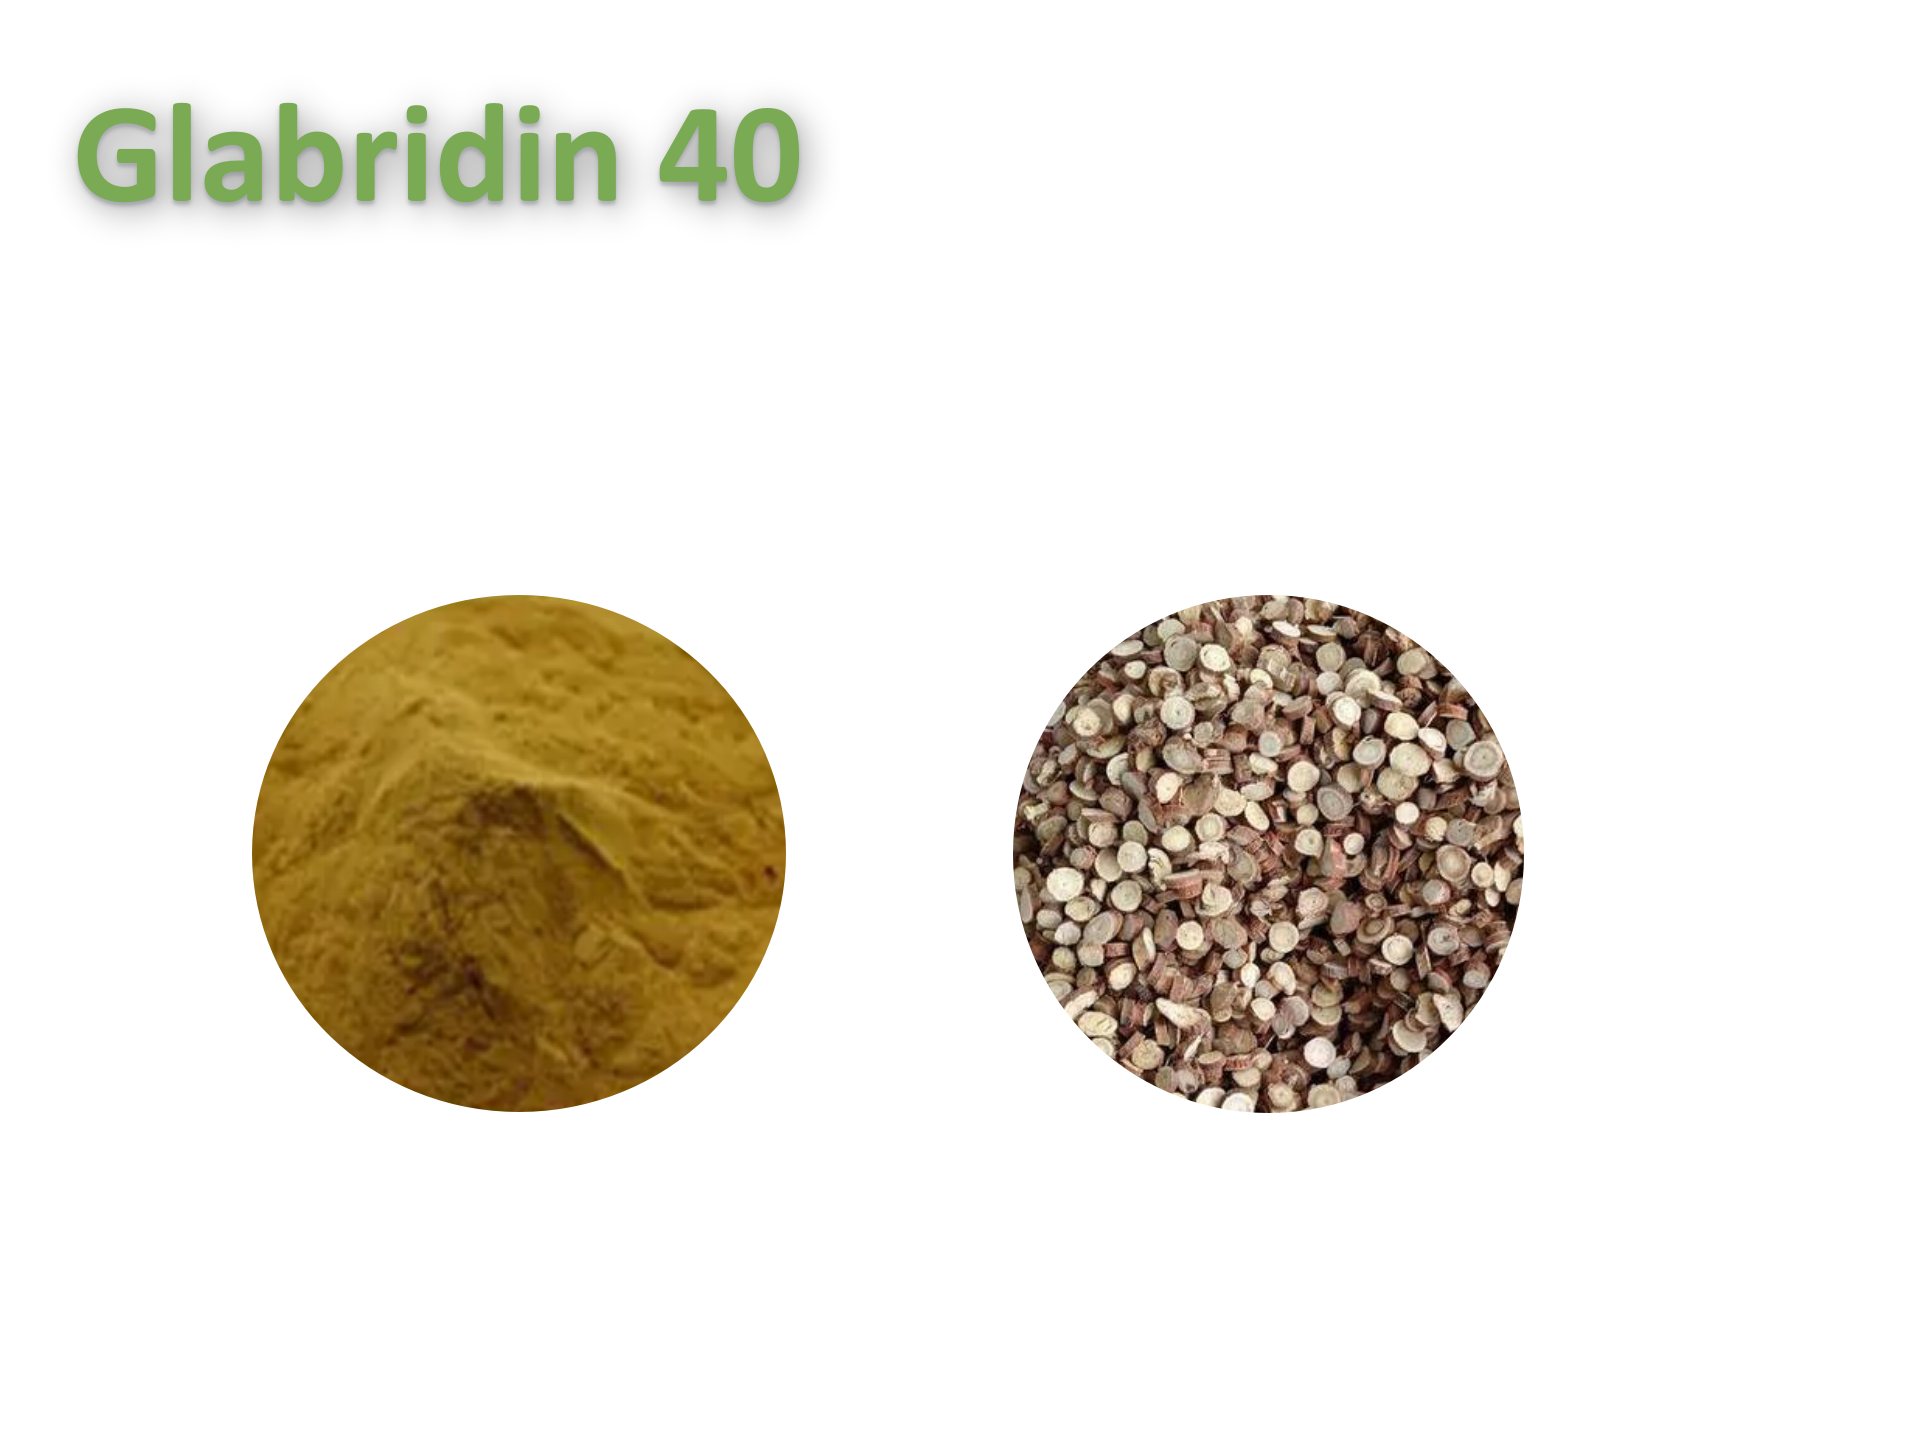 Glabridina 40